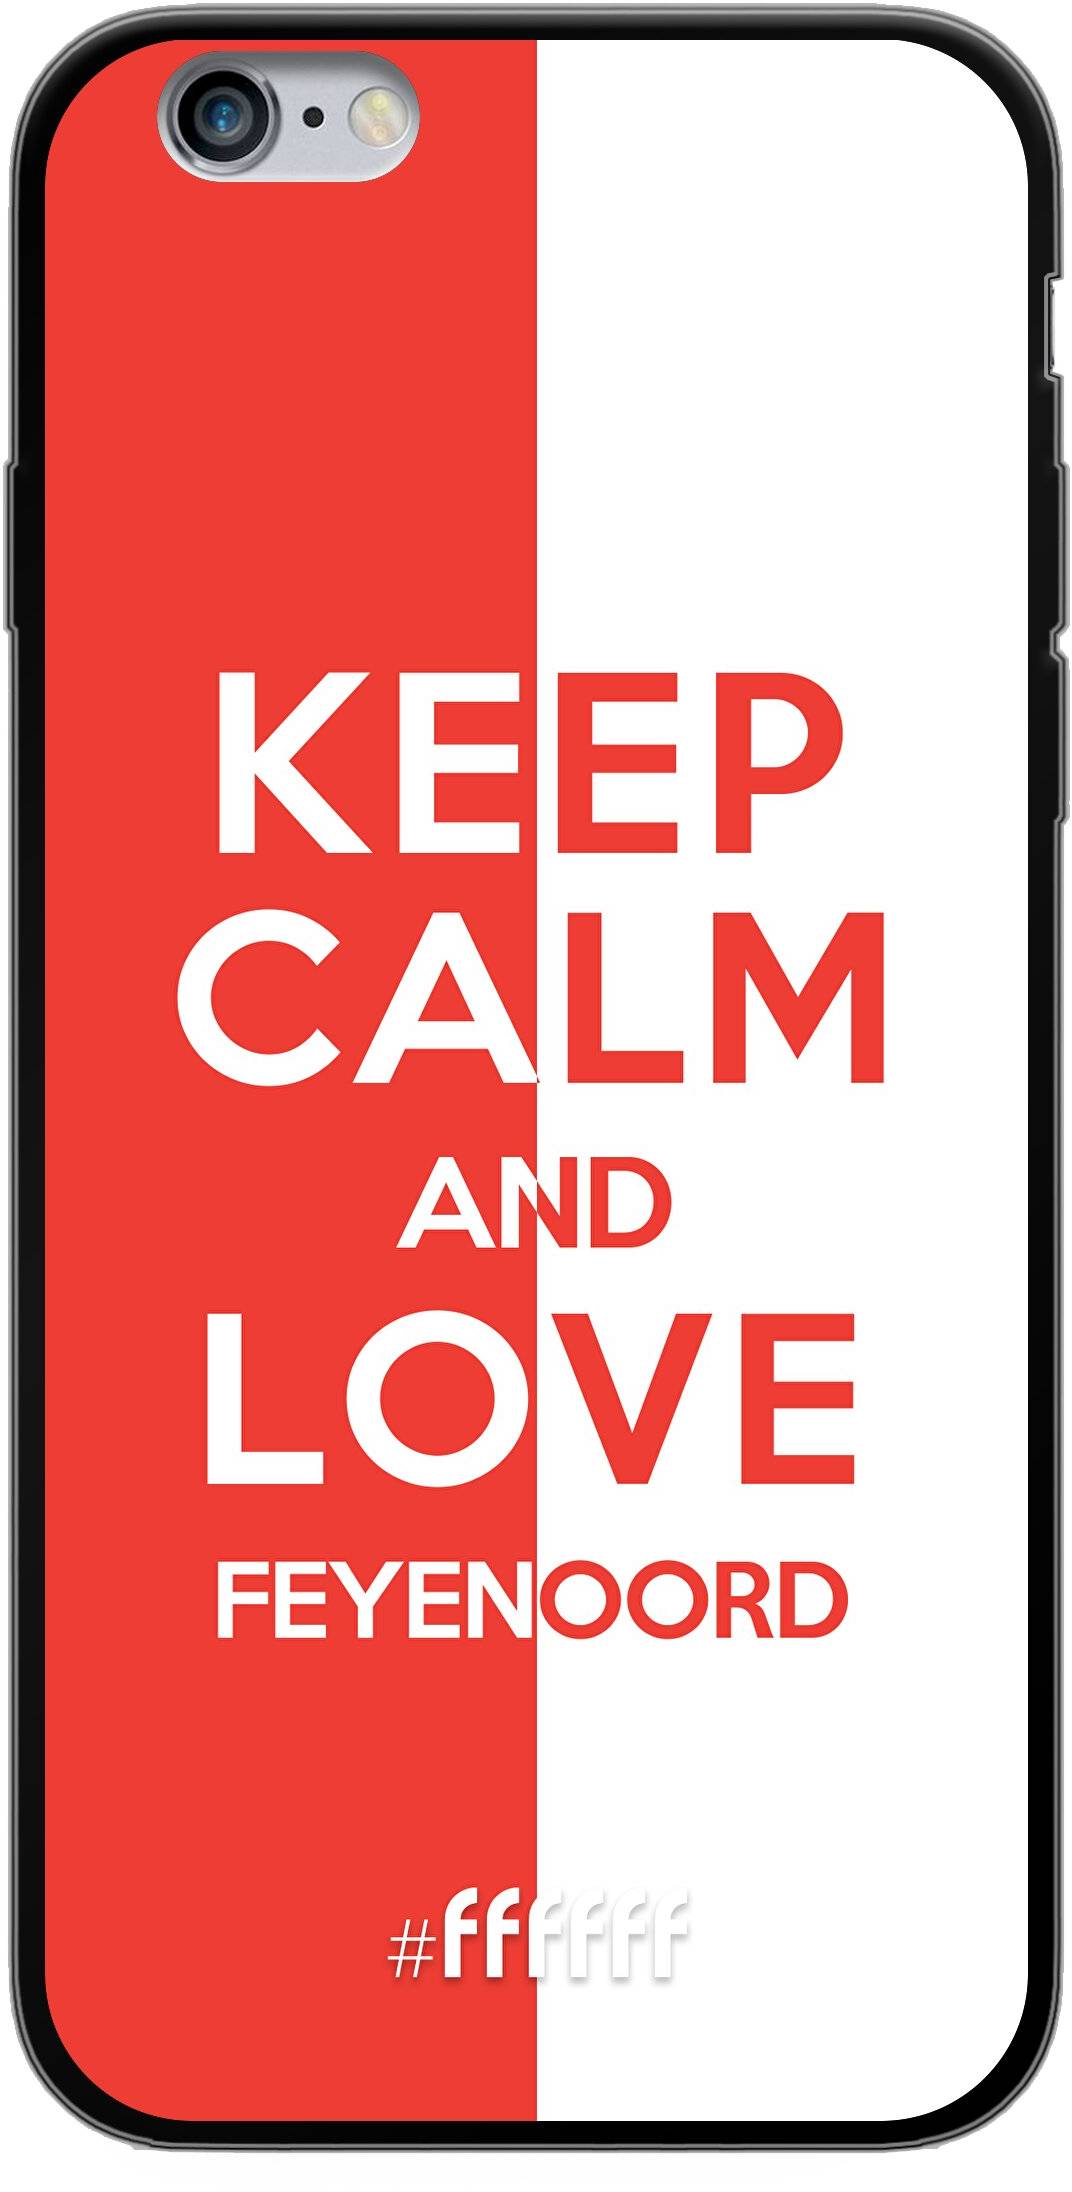 Feyenoord - Keep calm iPhone 6s